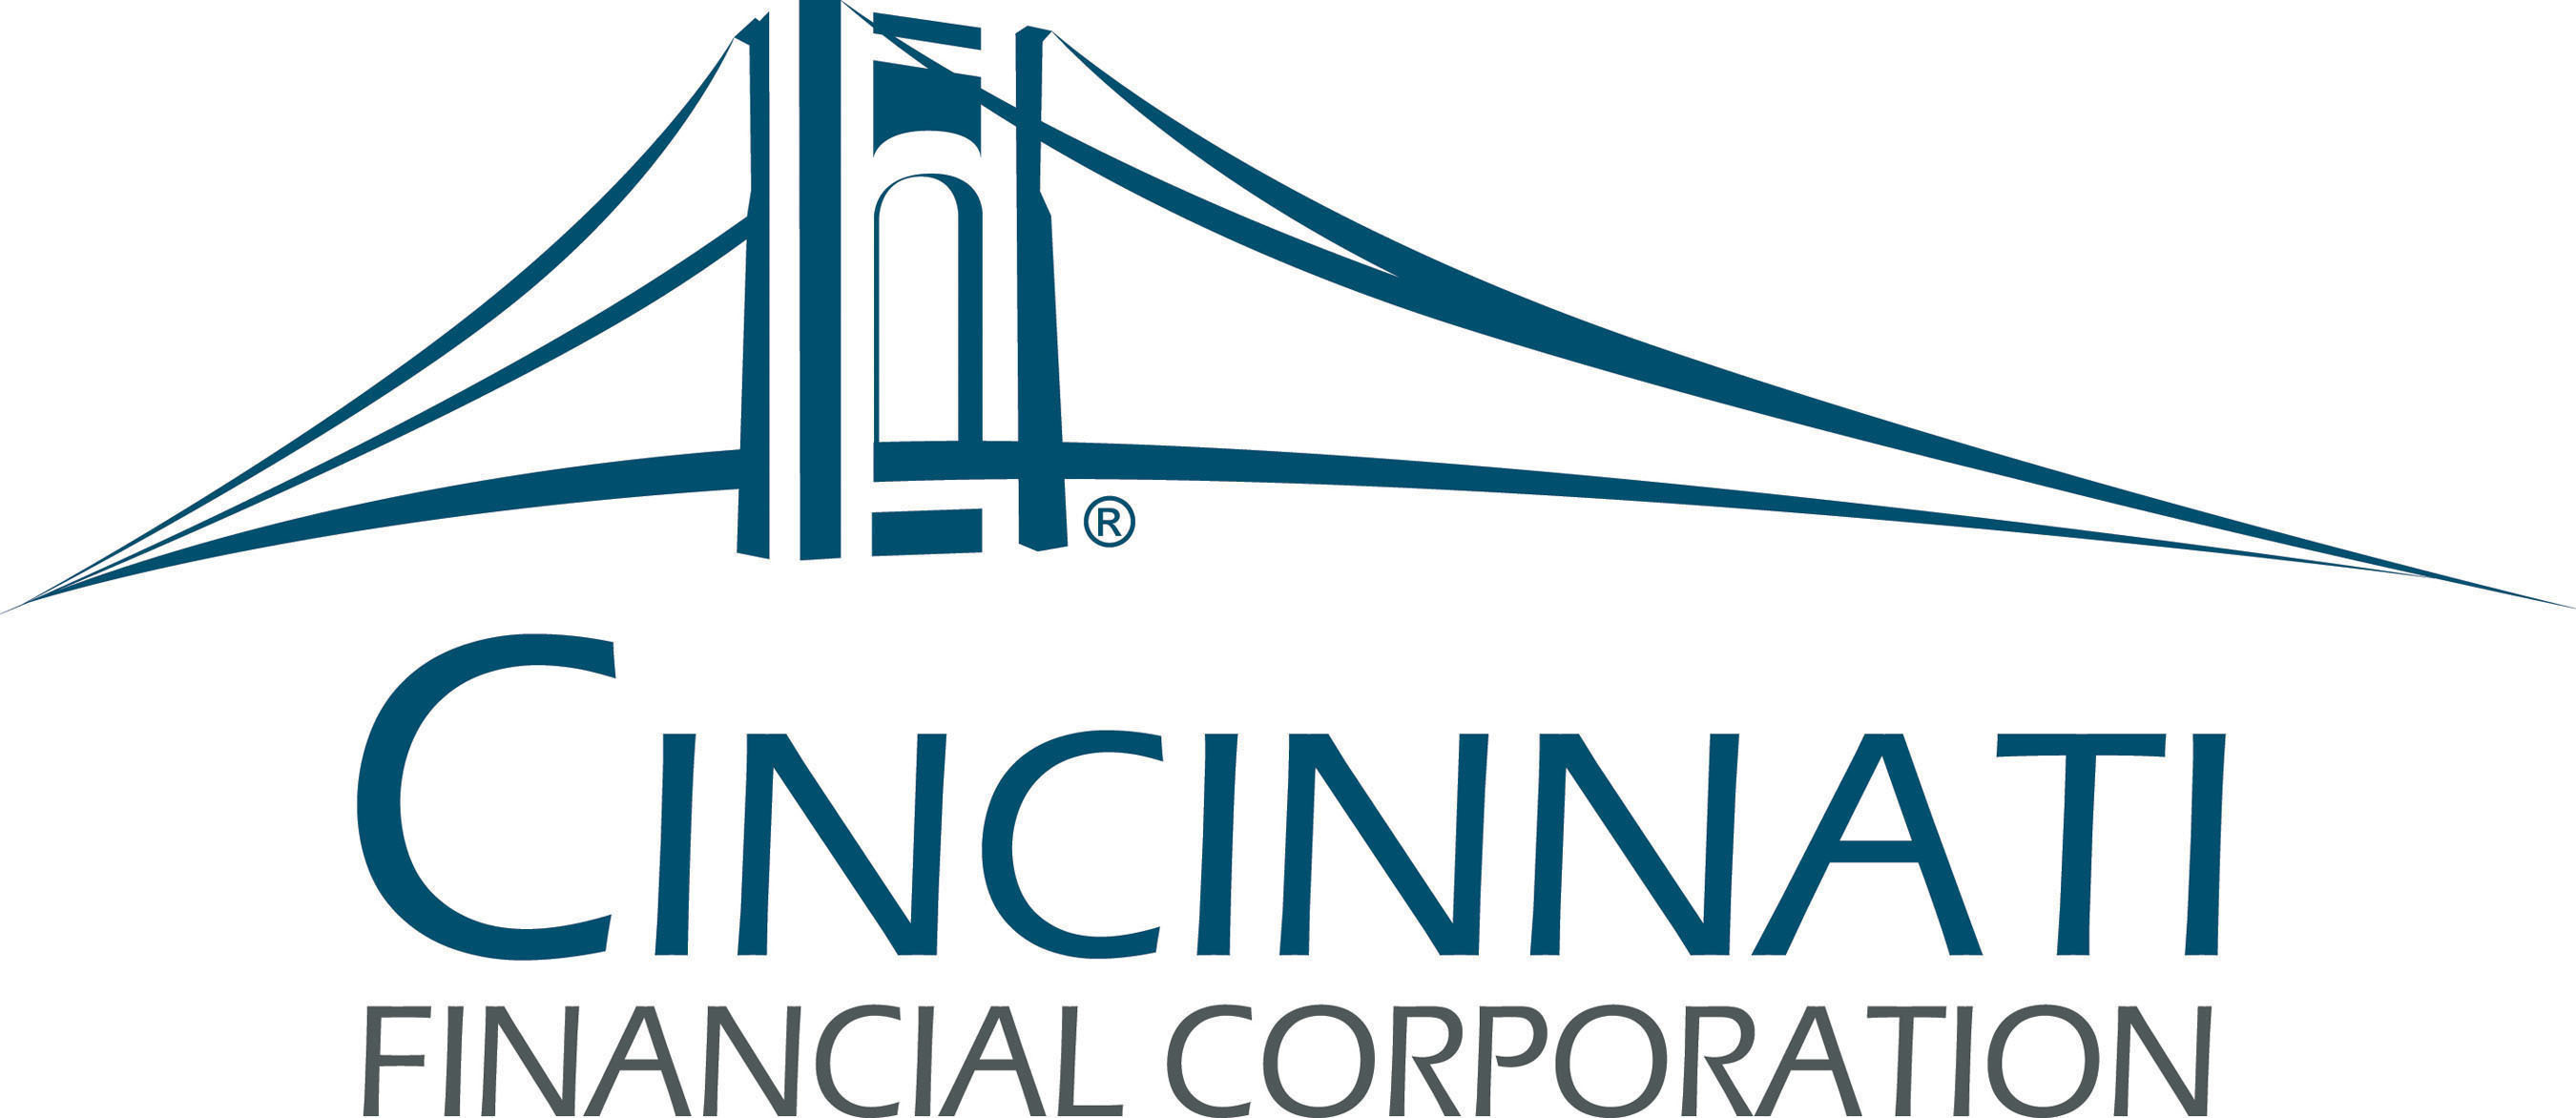 Cincinnati Financial Corporation logo. (PRNewsFoto/Cincinnati Financial Corporation) (PRNewsFoto/CINCINNATI FINANCIAL CORPORATION)